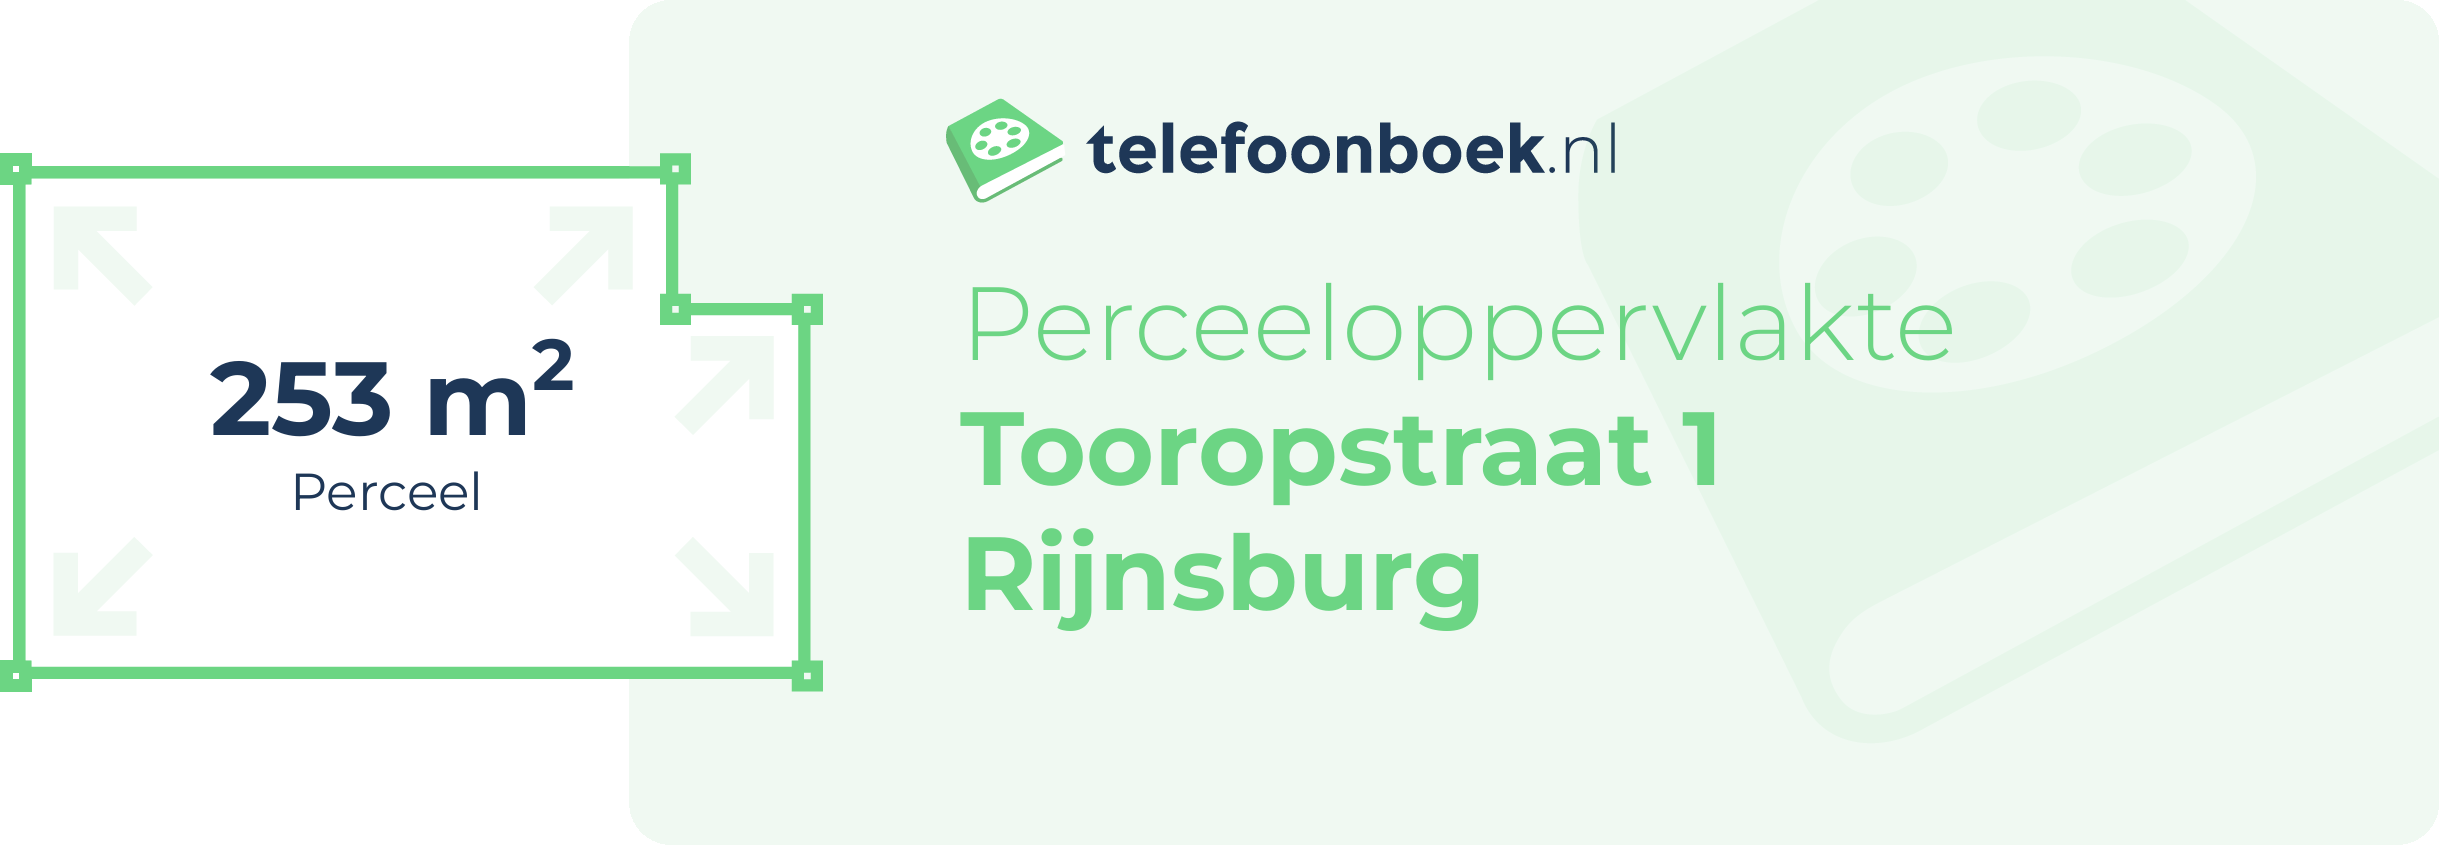 Perceeloppervlakte Tooropstraat 1 Rijnsburg